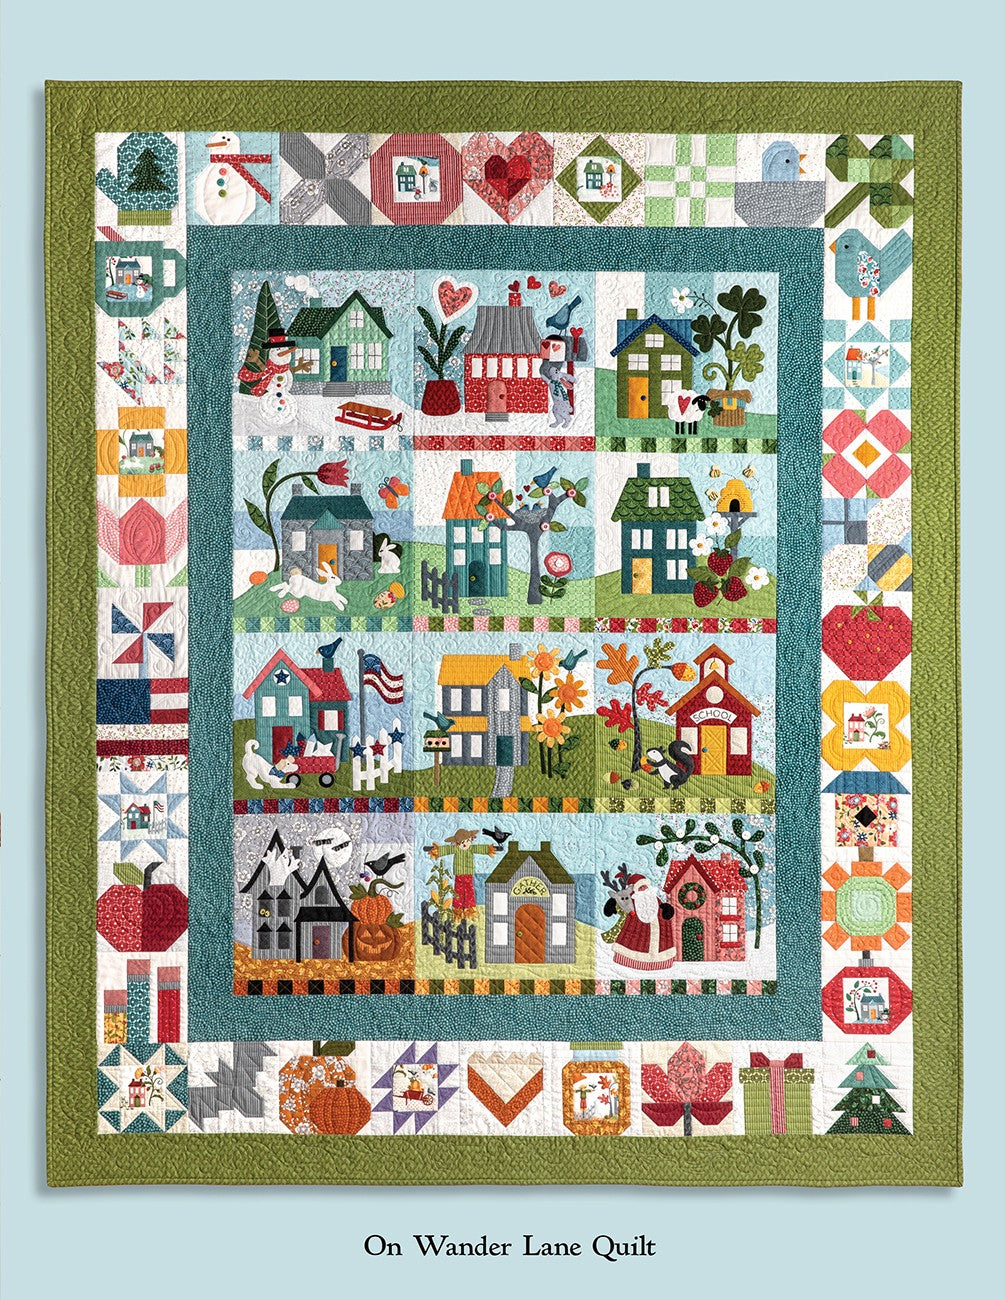 Harvest Acres on Wander Lane Quilt Pattern (November - Block 11) by Nancy Halvorsen of Art to Heart